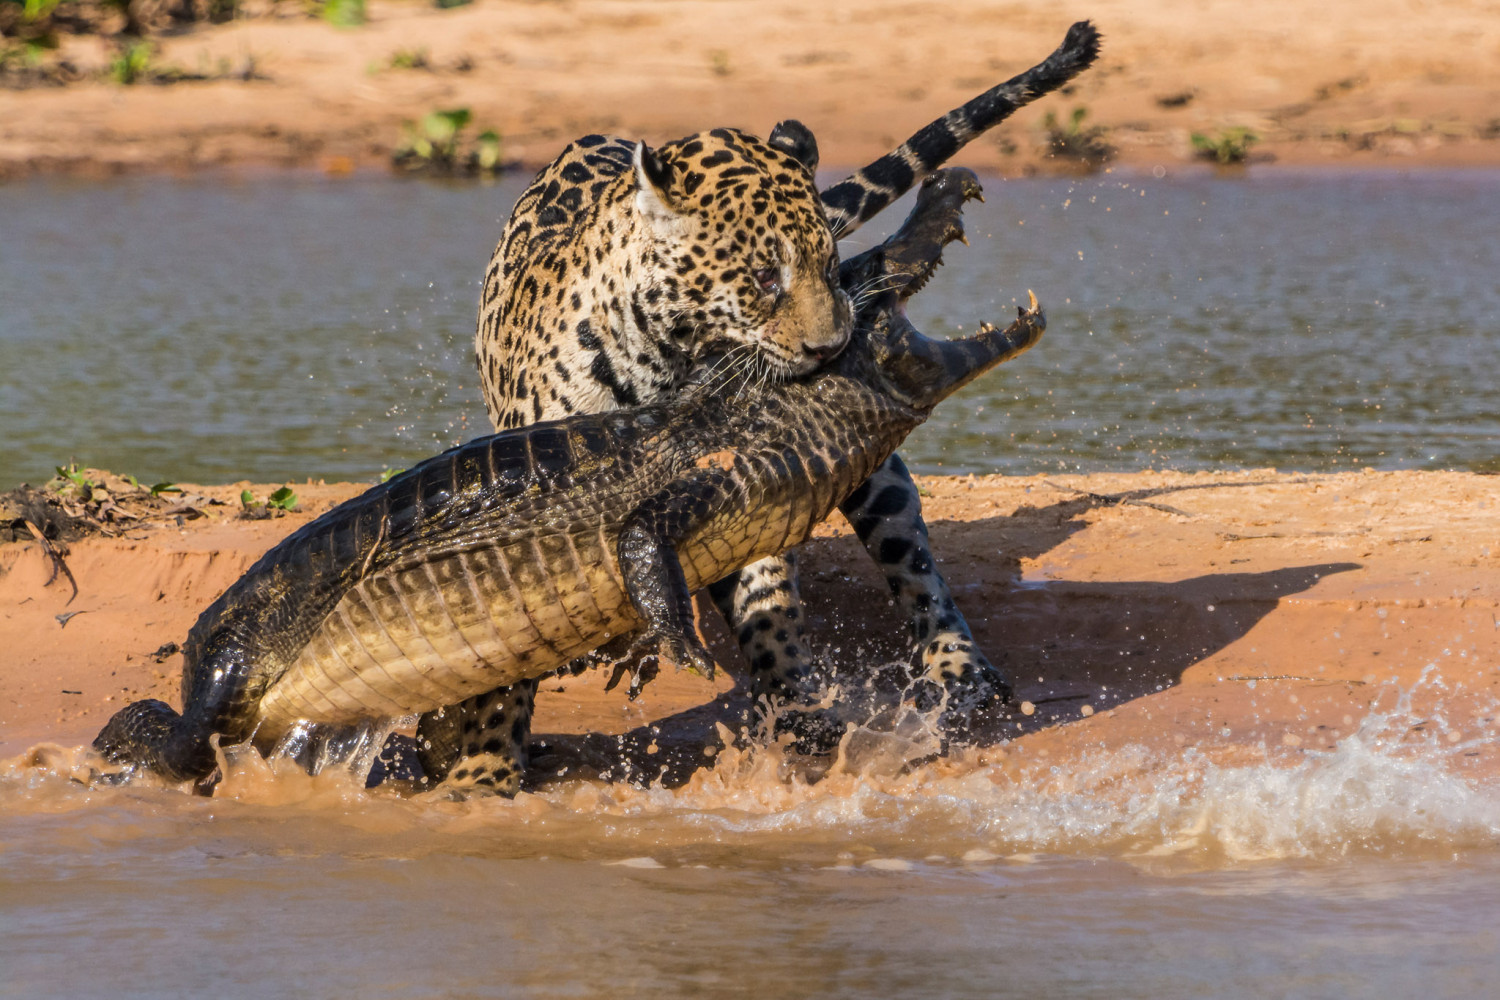 Jaguar Attacks Caiman in This Intense Series of Wildlife Images